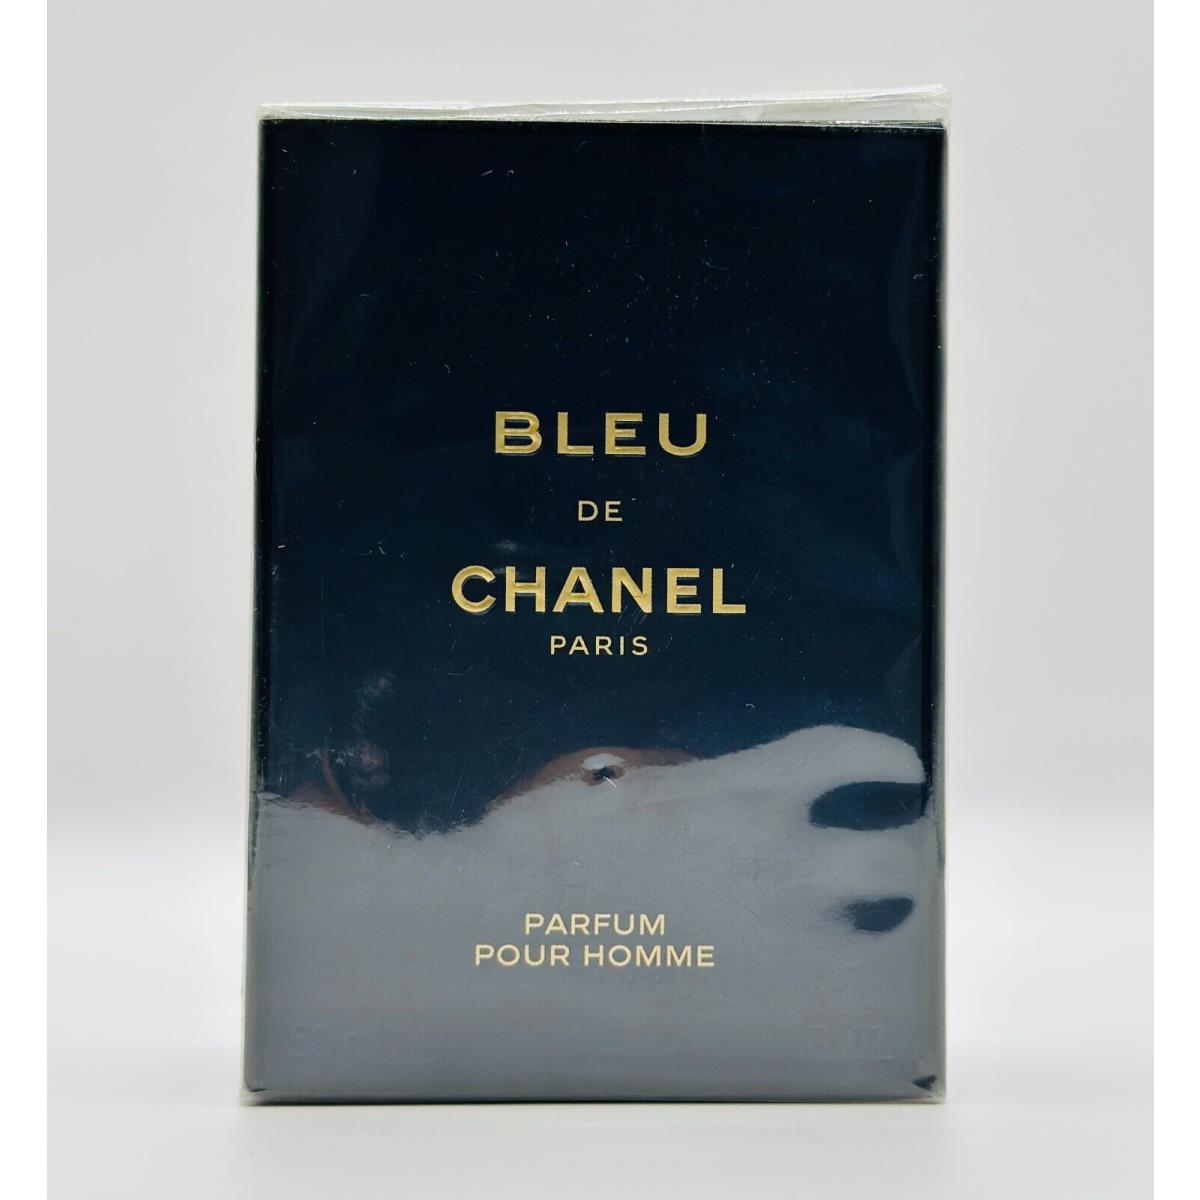 Chanel Bleu de Chanel 50ml / 1.7oz Parfum